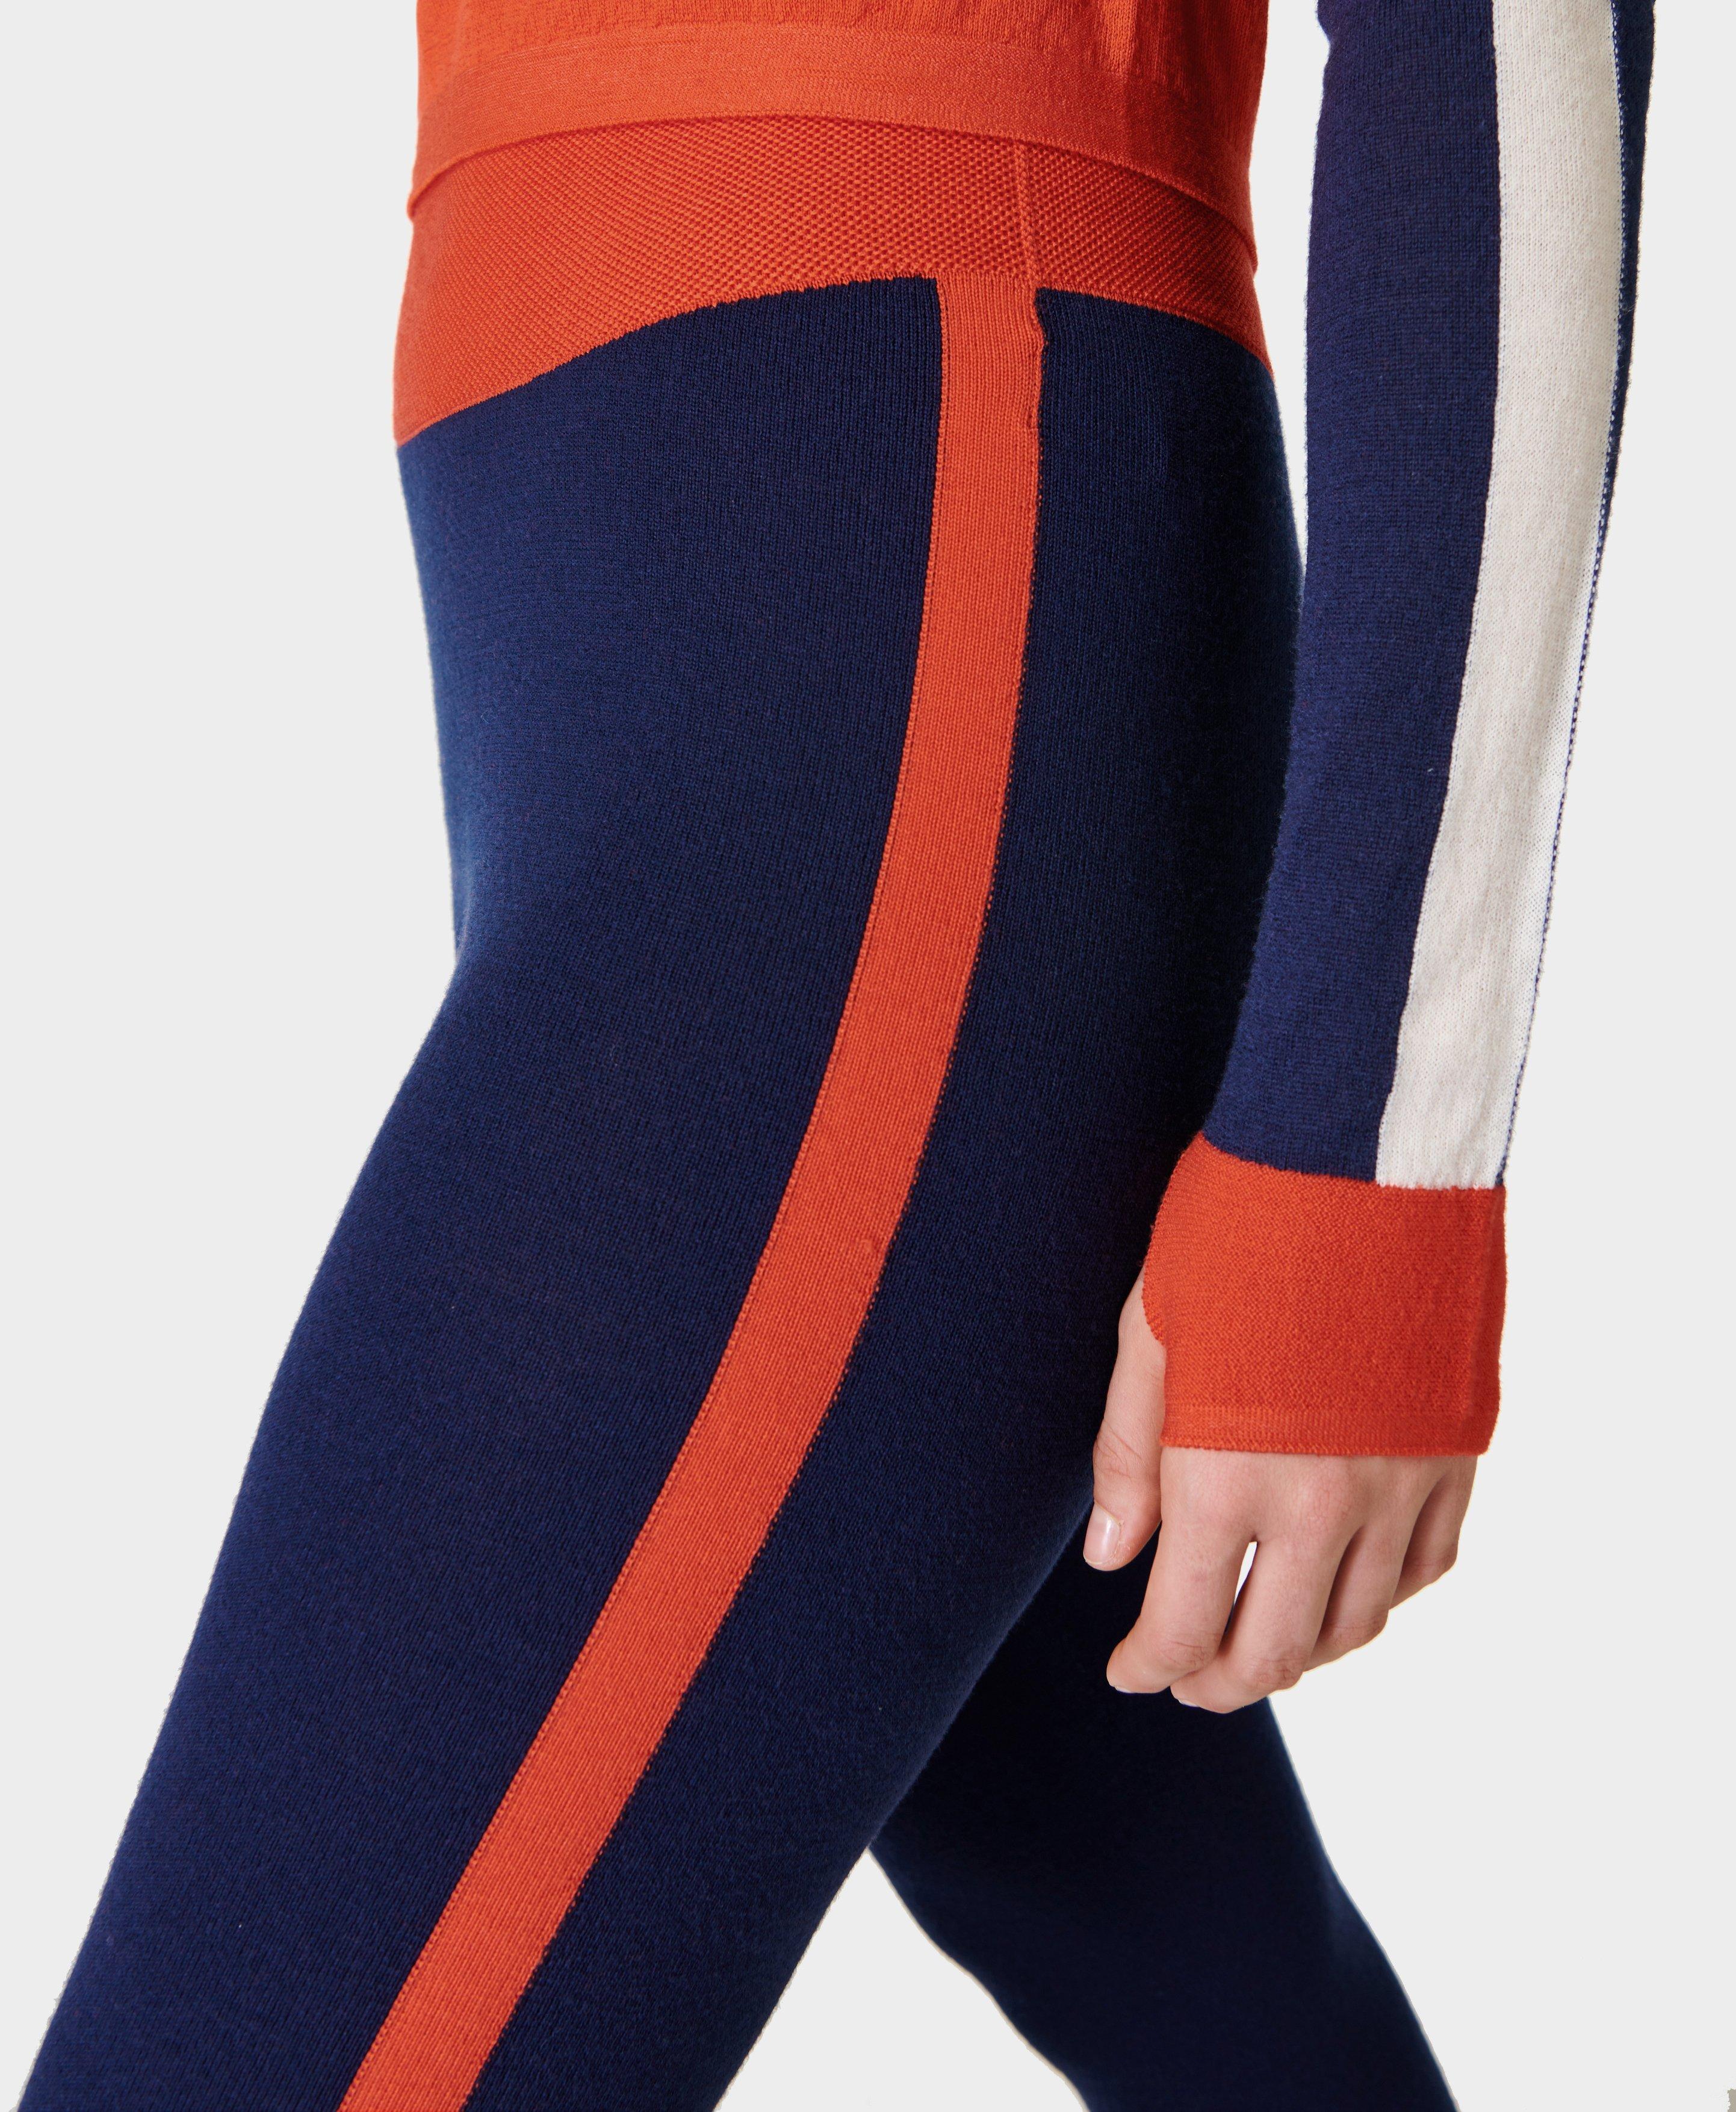 Colour Block Merino Base Layer Legging - Navy, Women's Ski Clothes